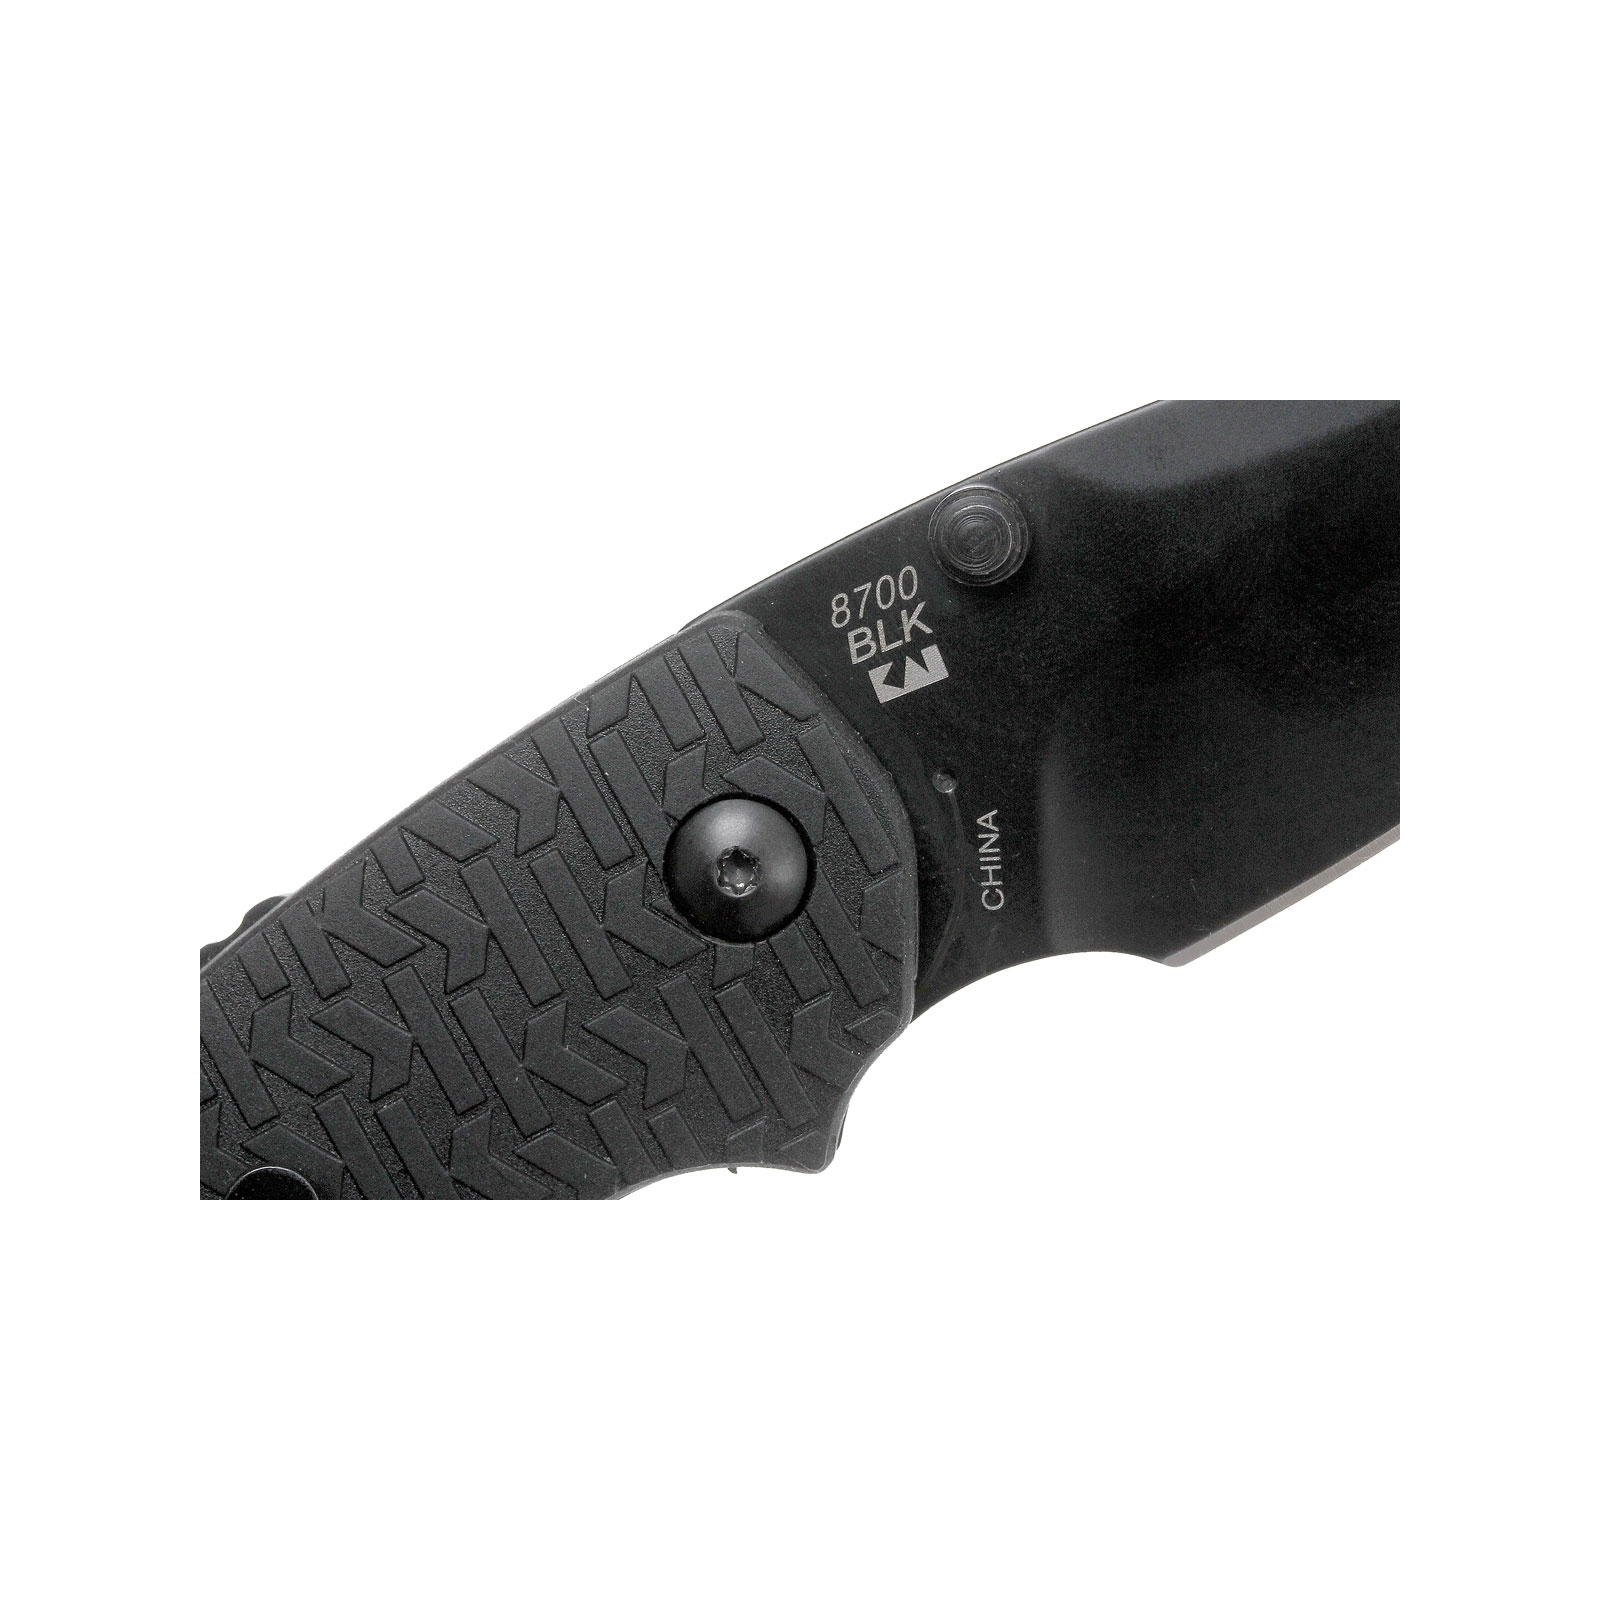 Нож Kershaw Shuffle голубой (8700TEALBW) изображение 4